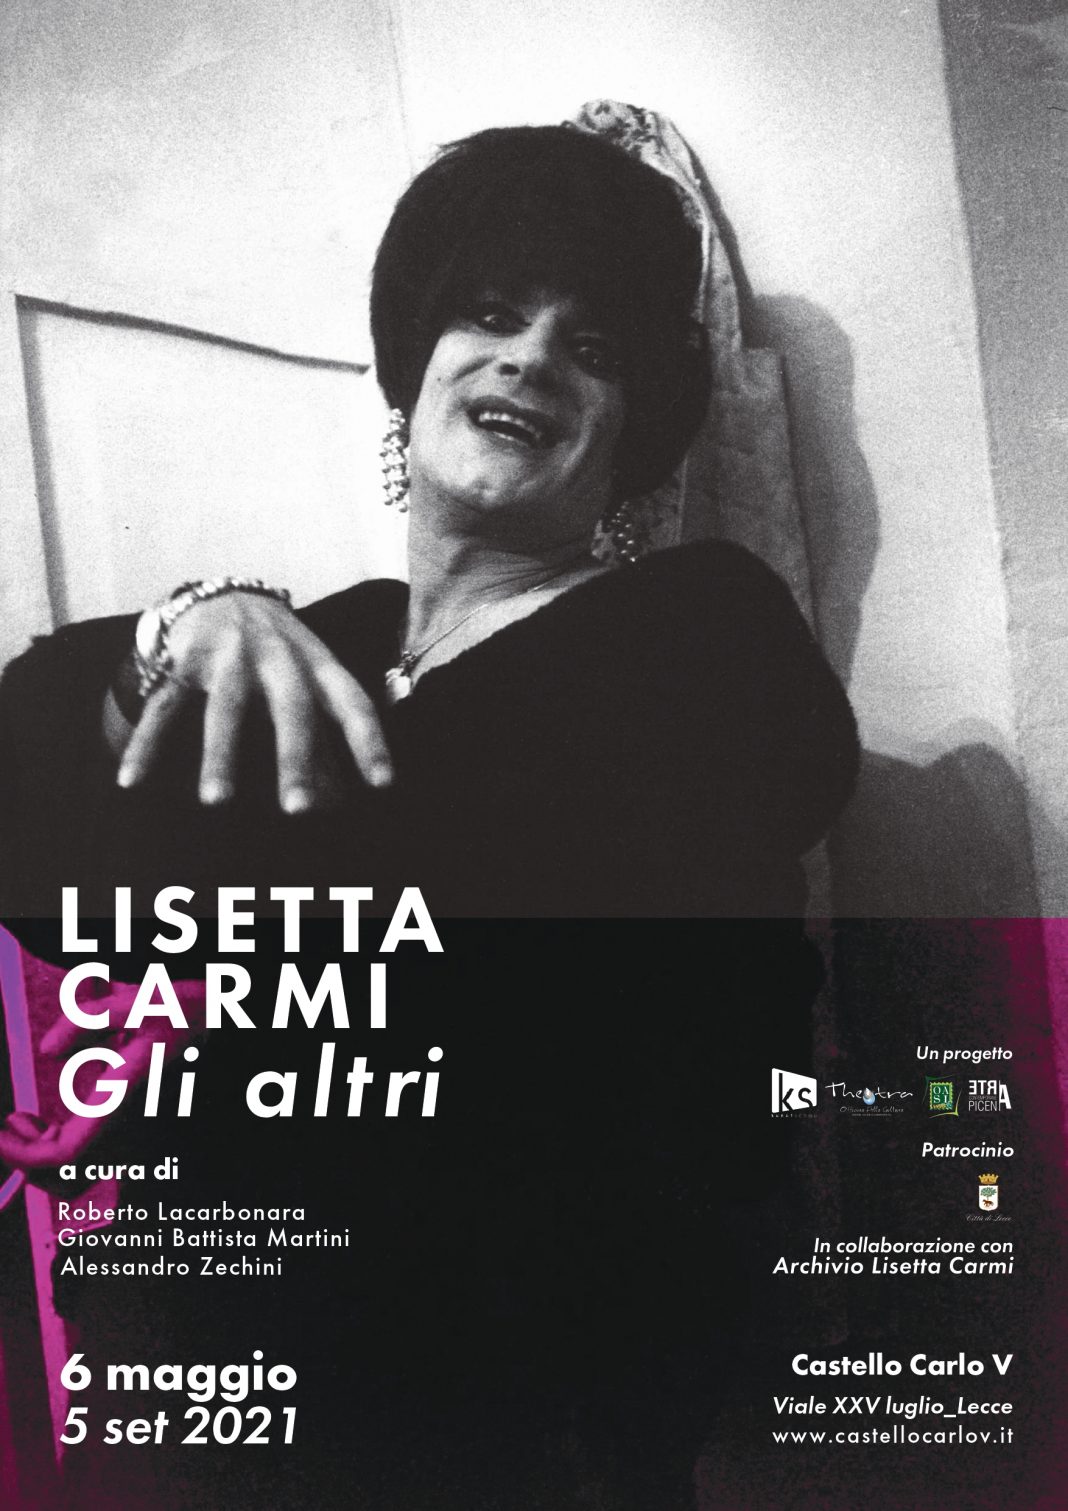 Lisetta Carmi – Gli altrihttps://www.exibart.com/repository/media/formidable/11/img/8e6/MANIFESTO-LISETTA-CARMI-A3-1068x1511.jpg